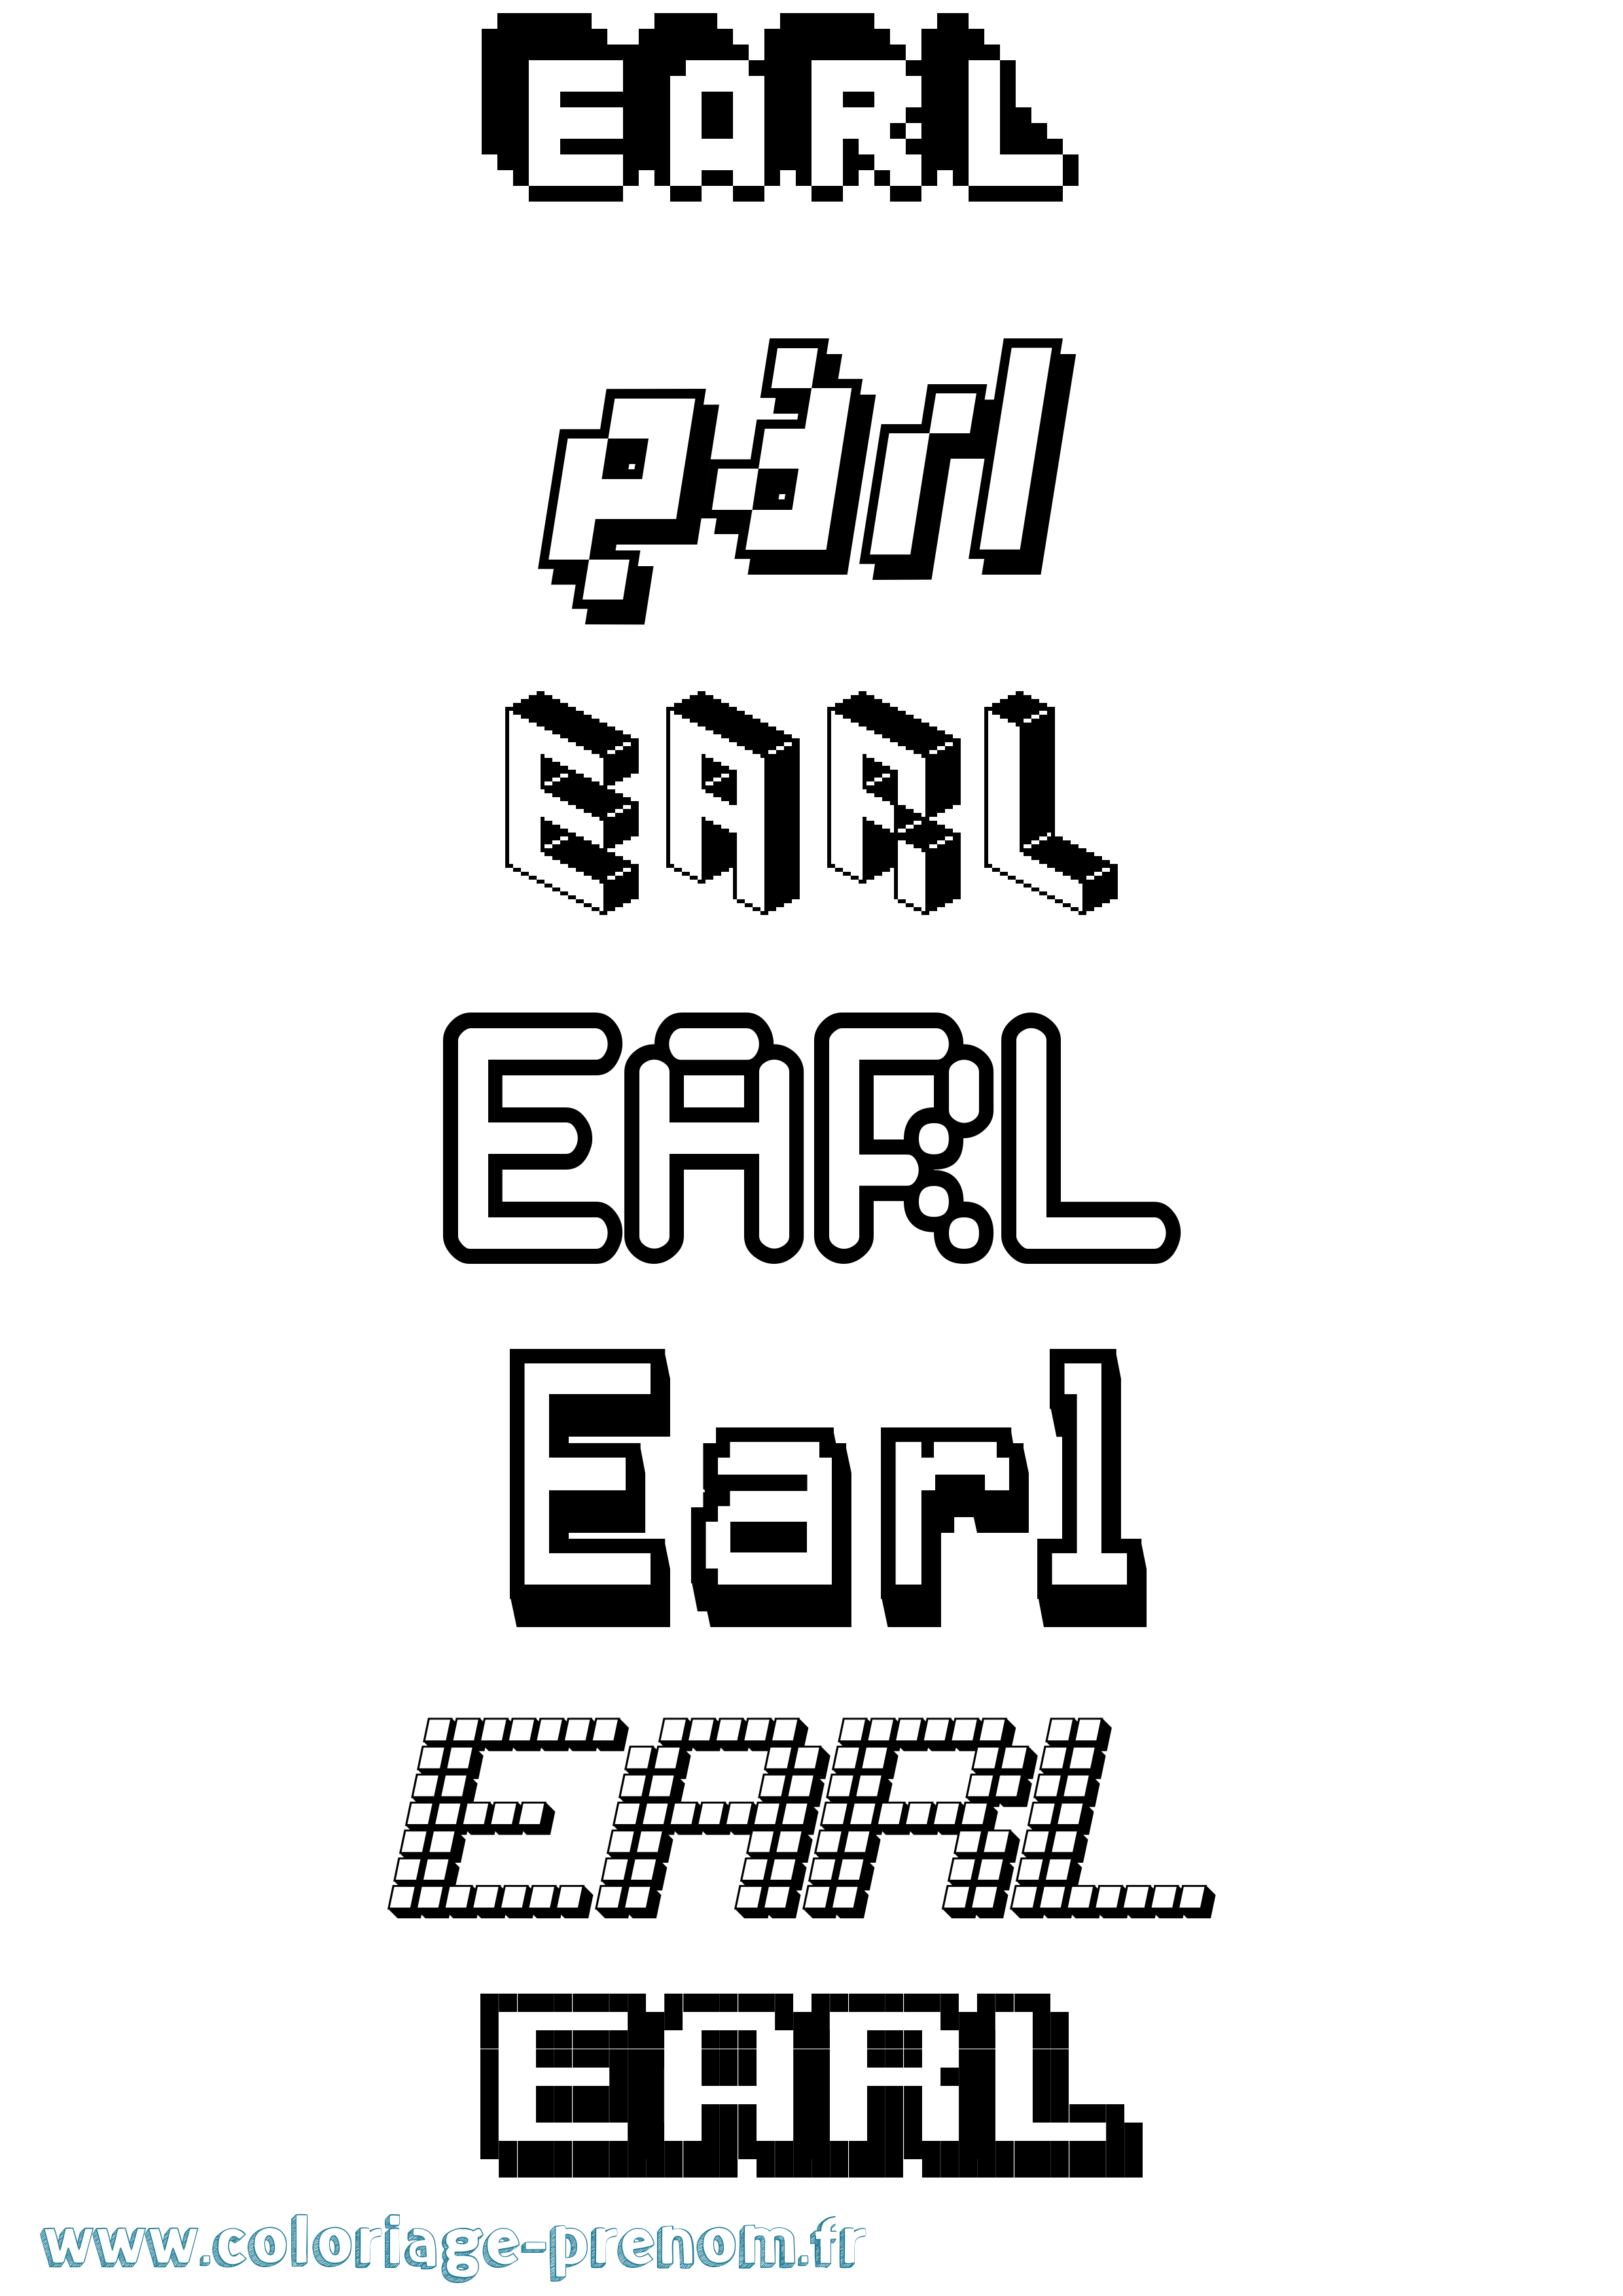 Coloriage prénom Earl Pixel